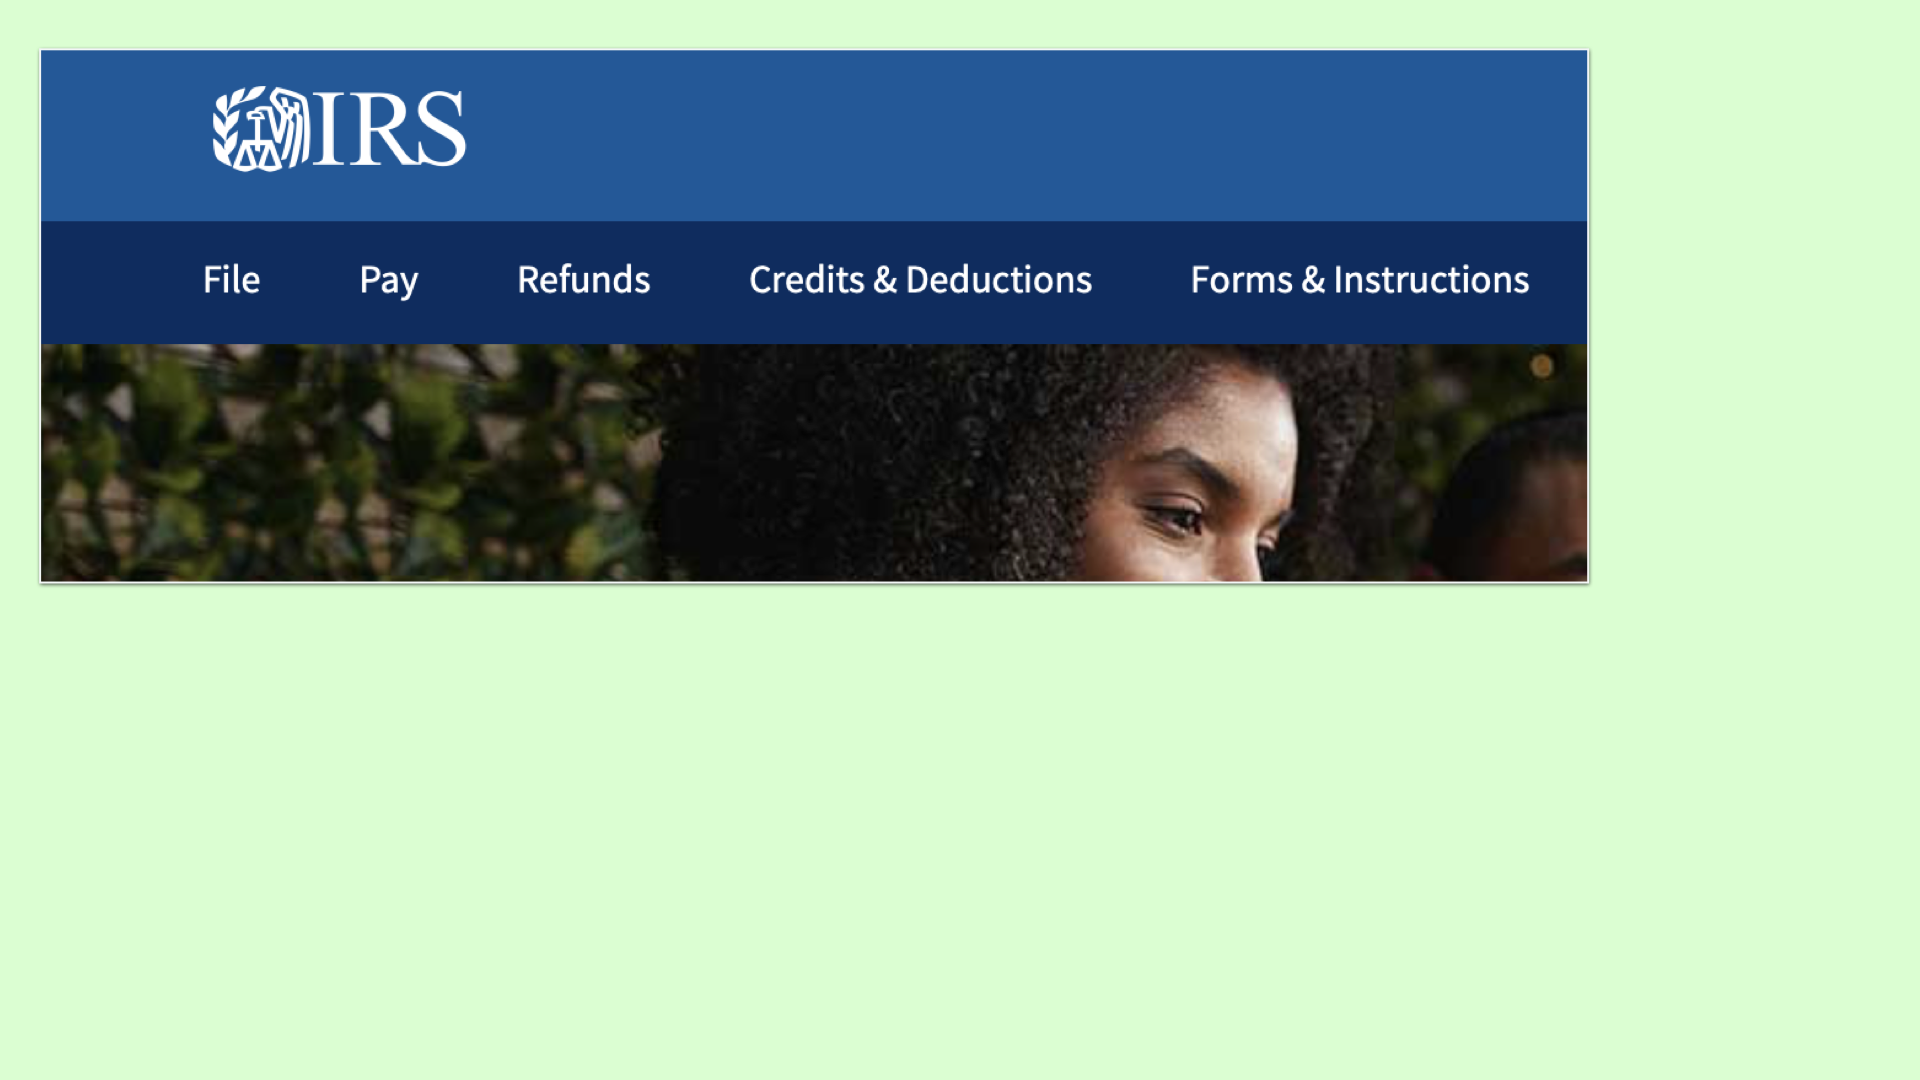 Main navigation of IRS website.